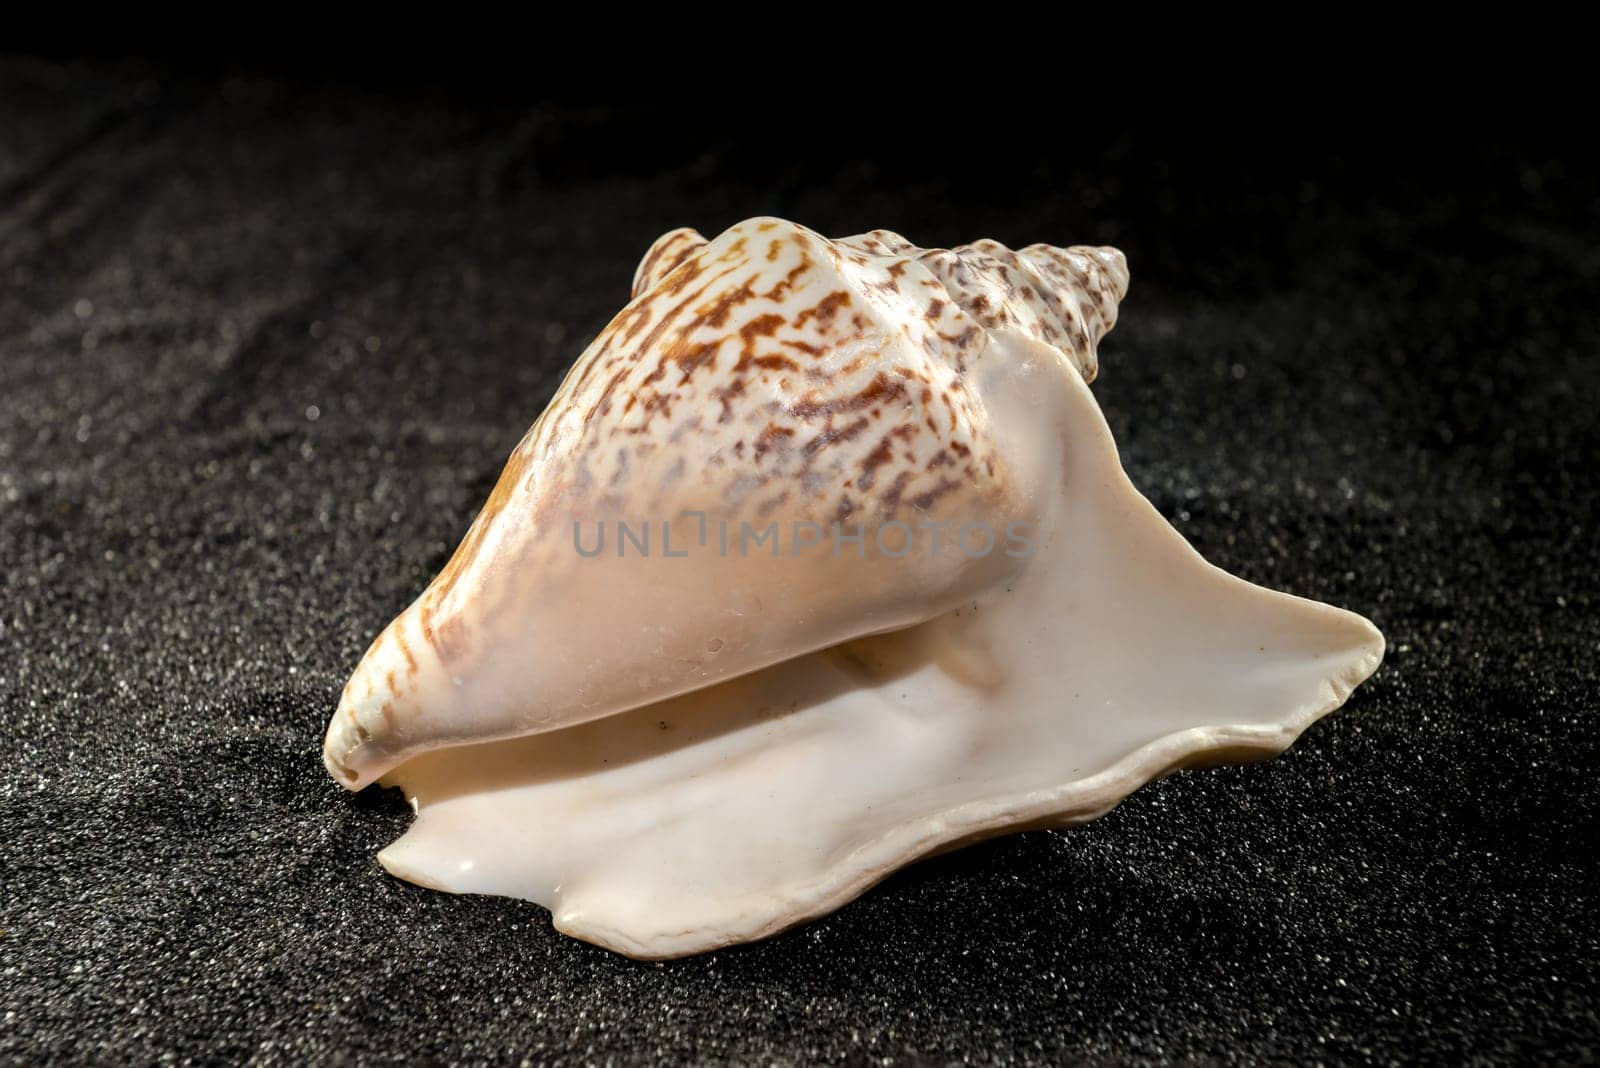 Strombus raninus seashell on a dark background by Multipedia